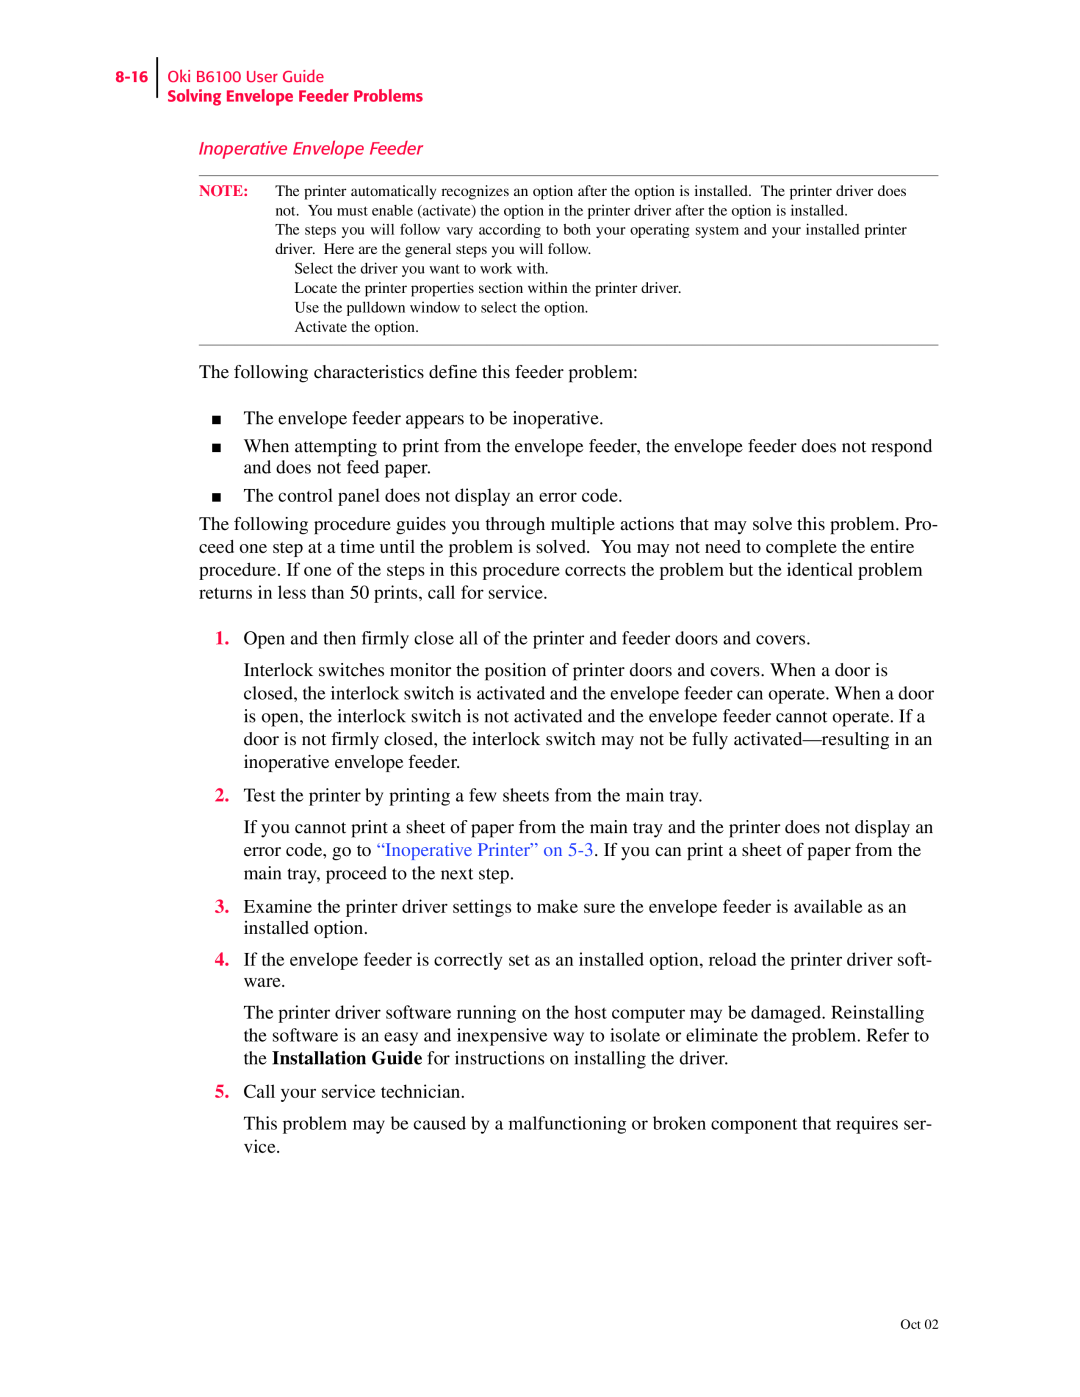 Oki manual Inoperative Envelope Feeder, Oki B6100 User Guide Solving Envelope Feeder Problems 